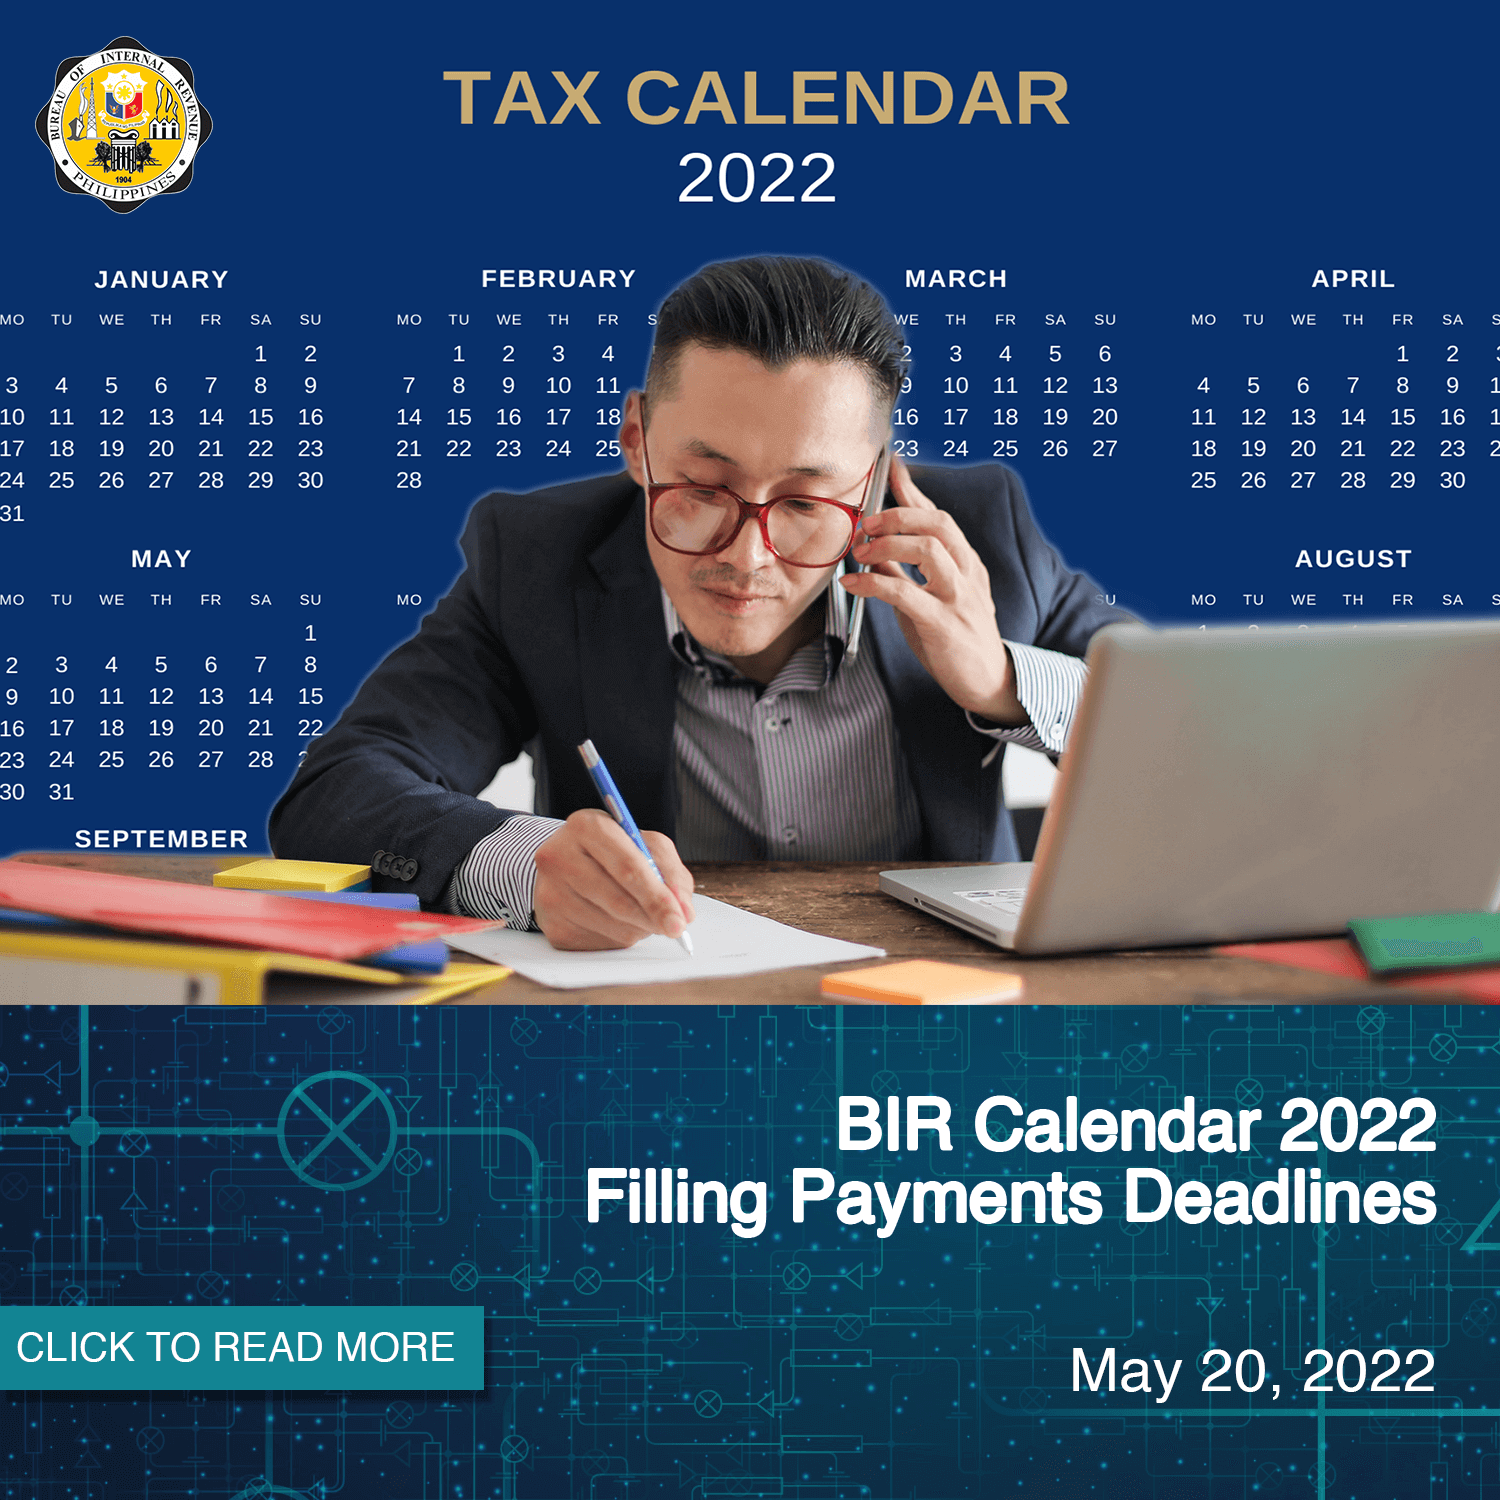 BIR Calendar 2022: Filling, Payments, Deadlines